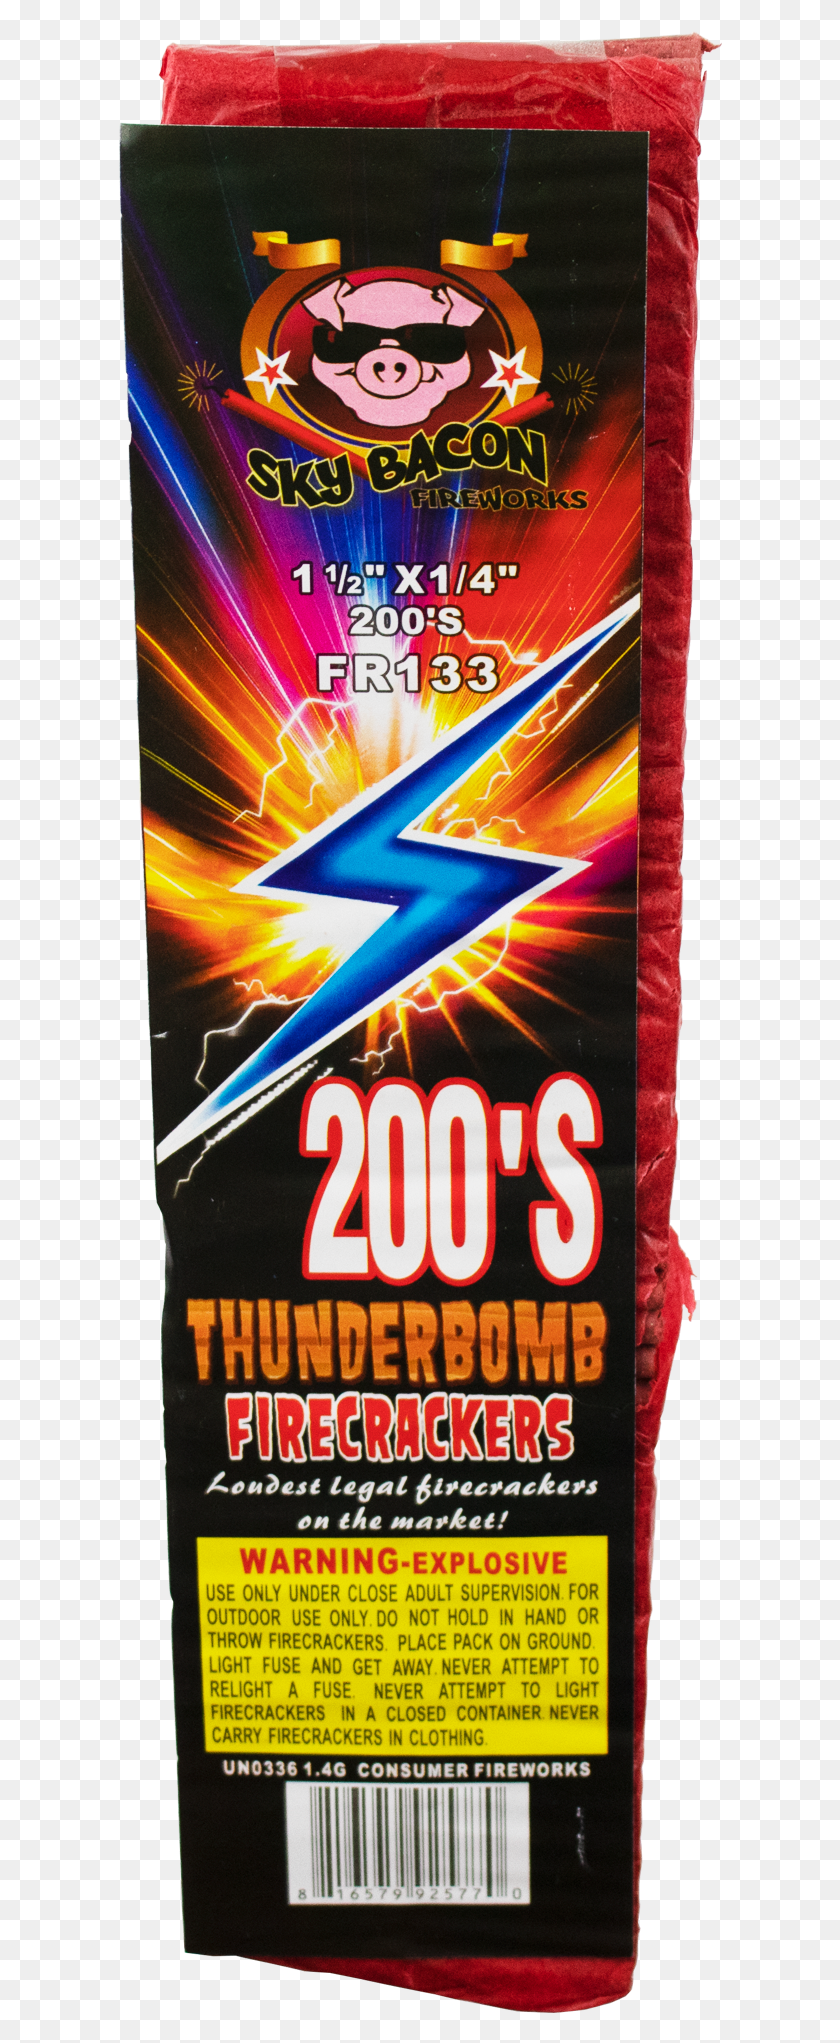 604x1983 Мультимедийное Программное Обеспечение Thunderbomb Firecrackers 200-Х Годов, Плакат, Реклама, Флаер Hd Png Скачать